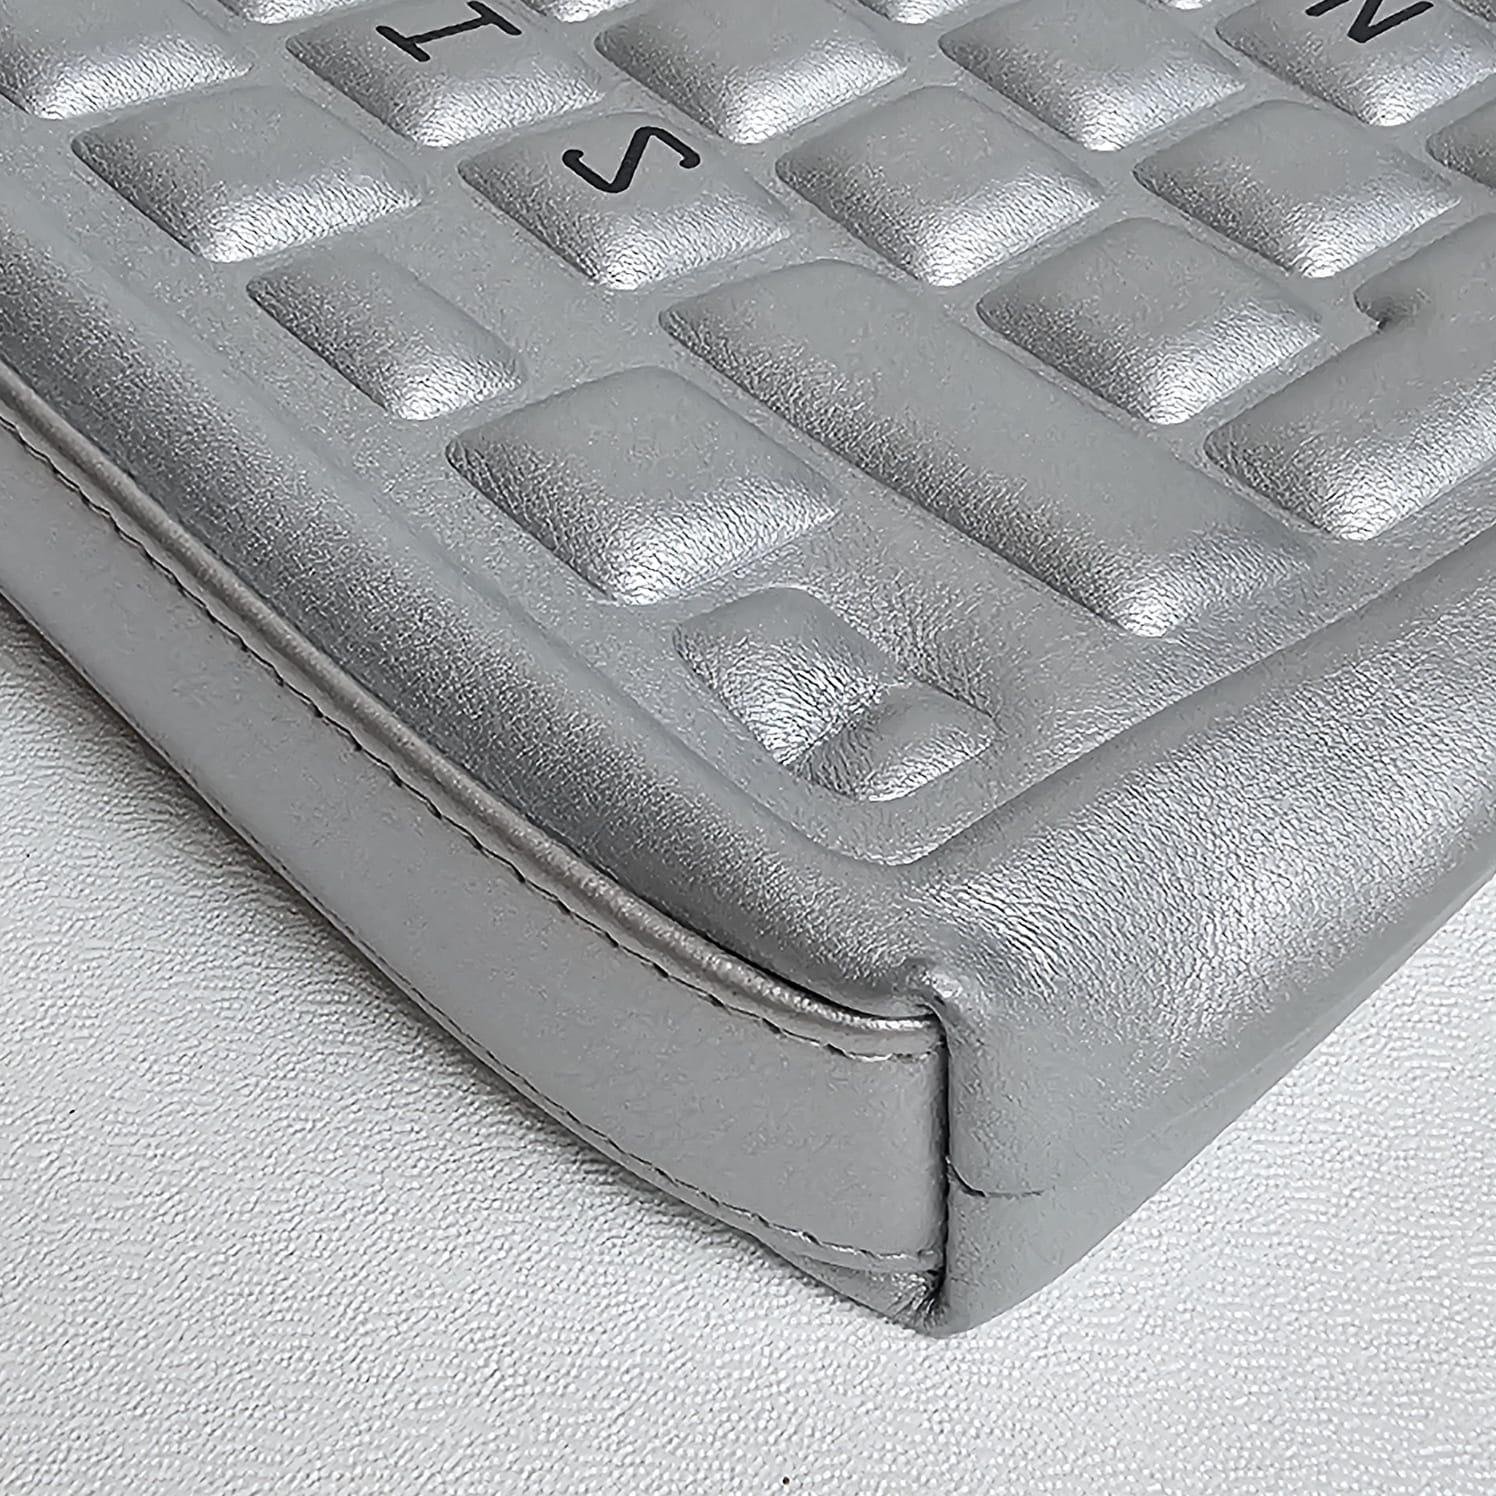 Rare 2017 Chanel Metallic Silver Keyboard Zip Clutch For Sale 4